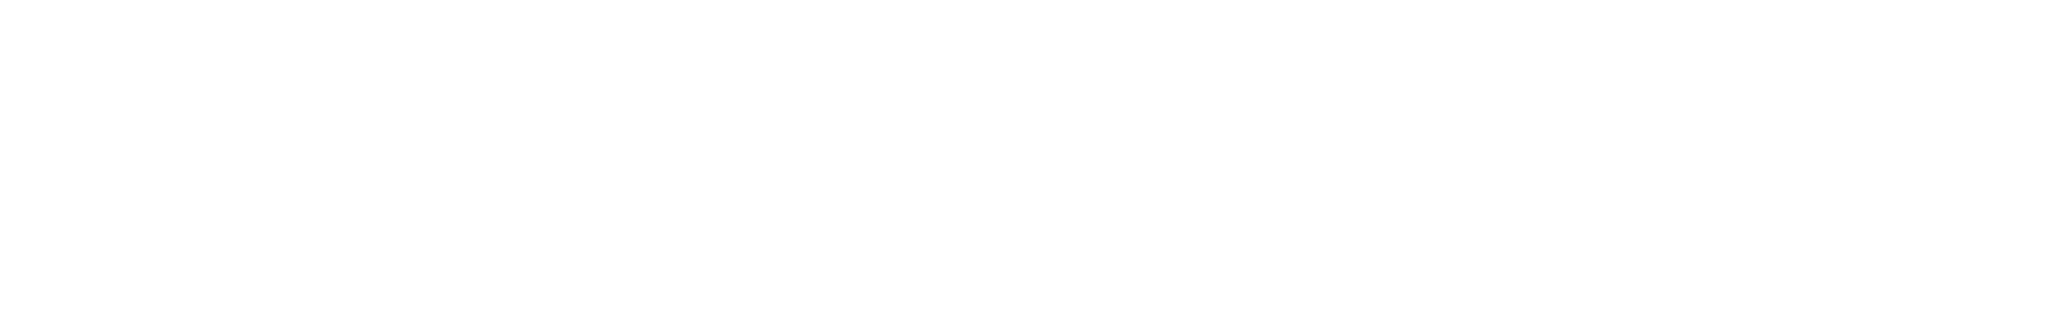 HarperCollins Publishers logo